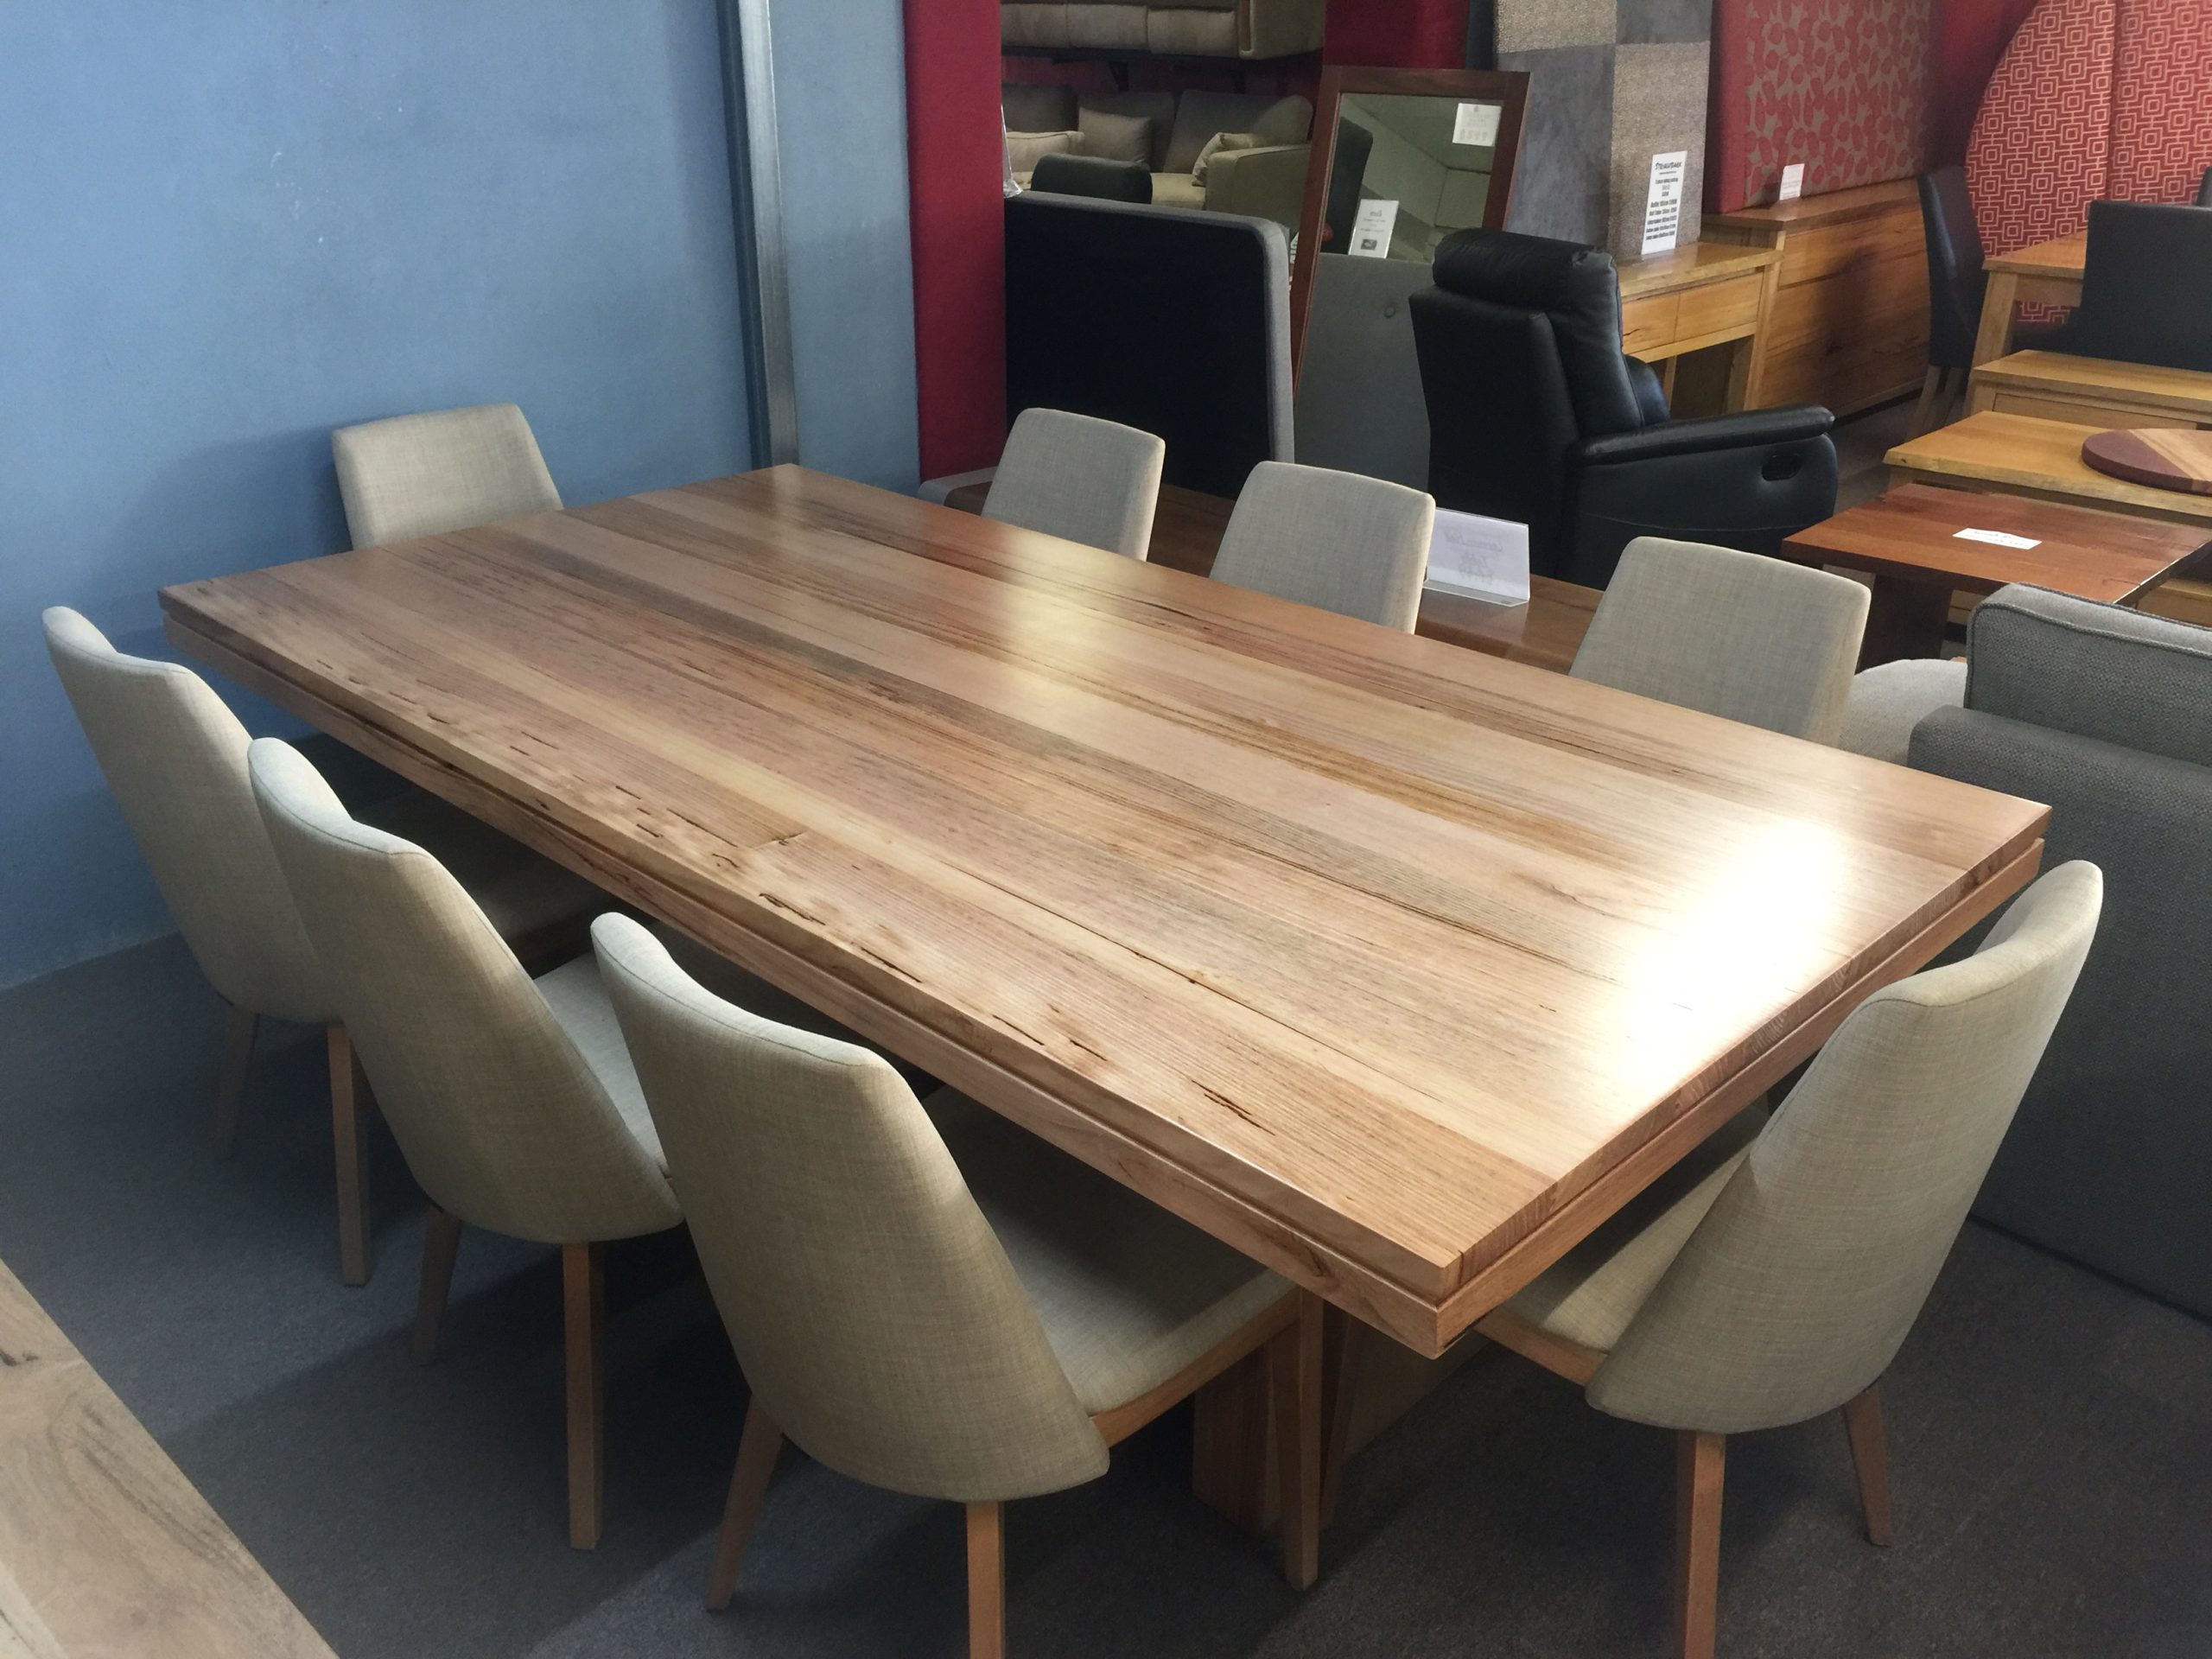 Custom Hardwood Design Tables